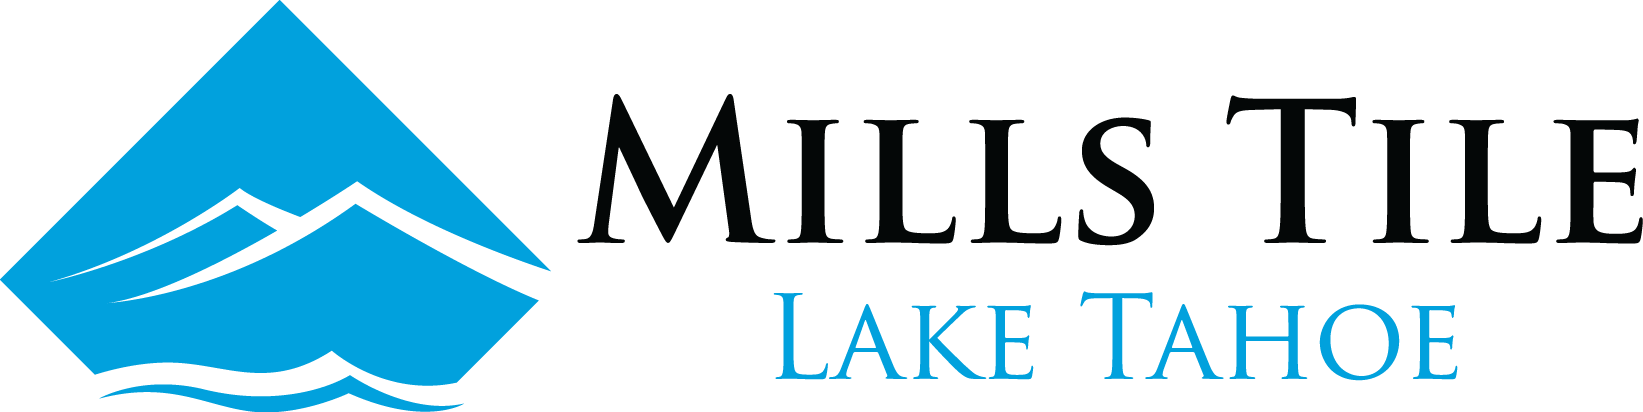 Mills Tile